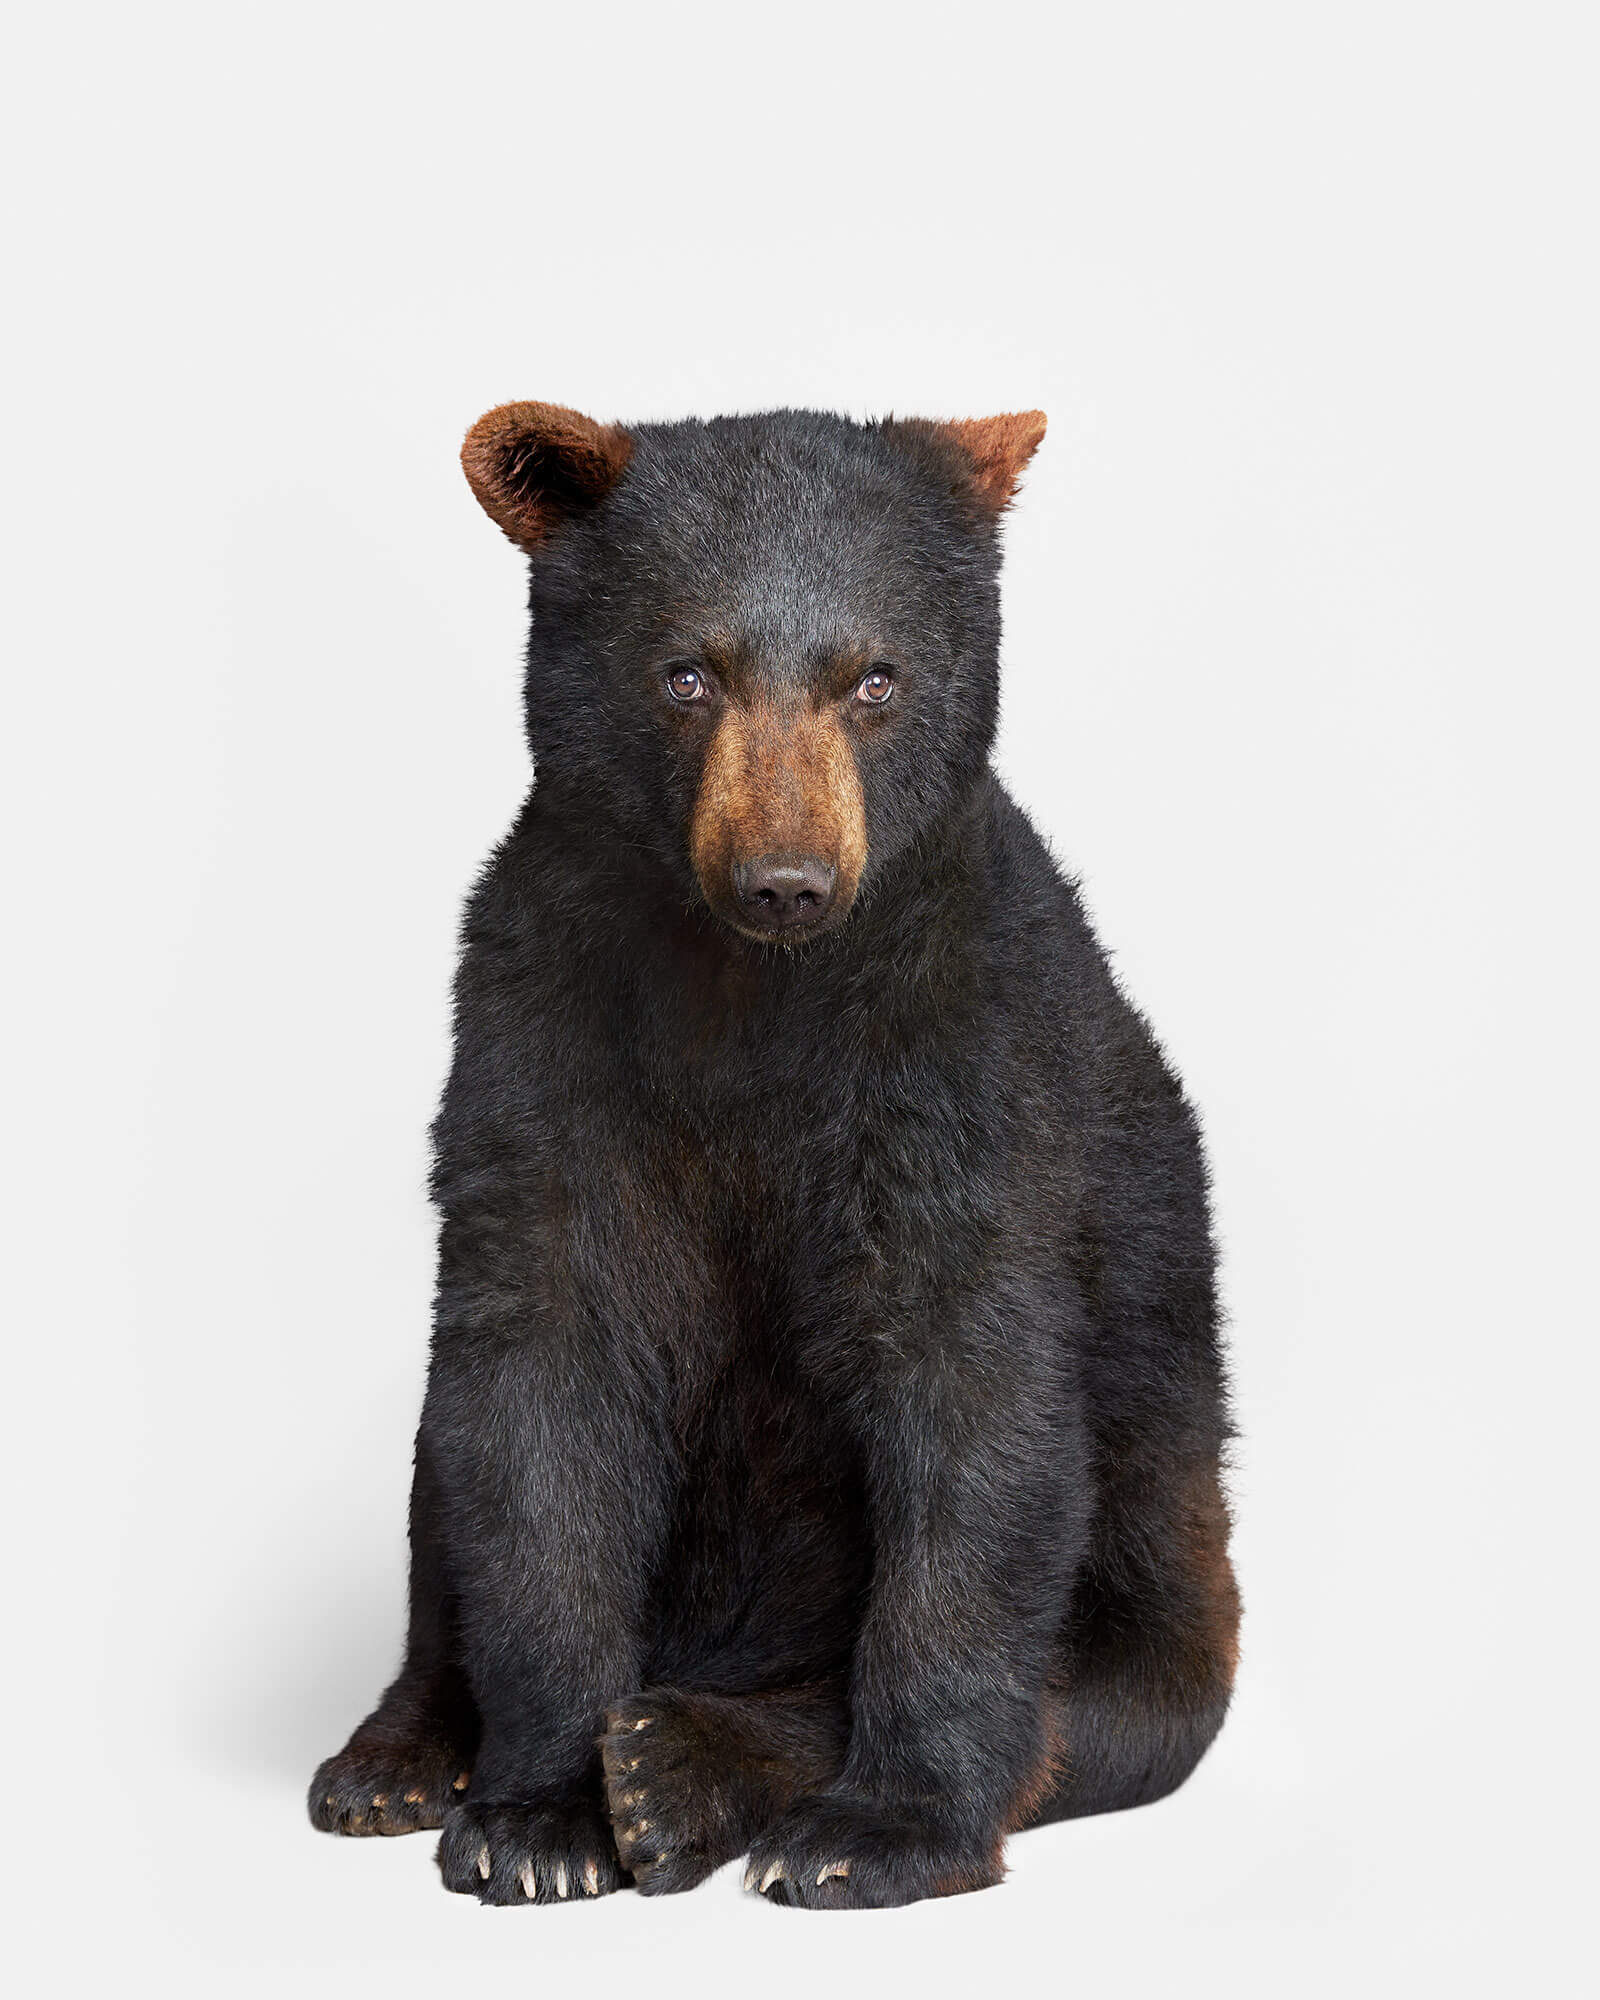 Image of Bear Cub, Andre